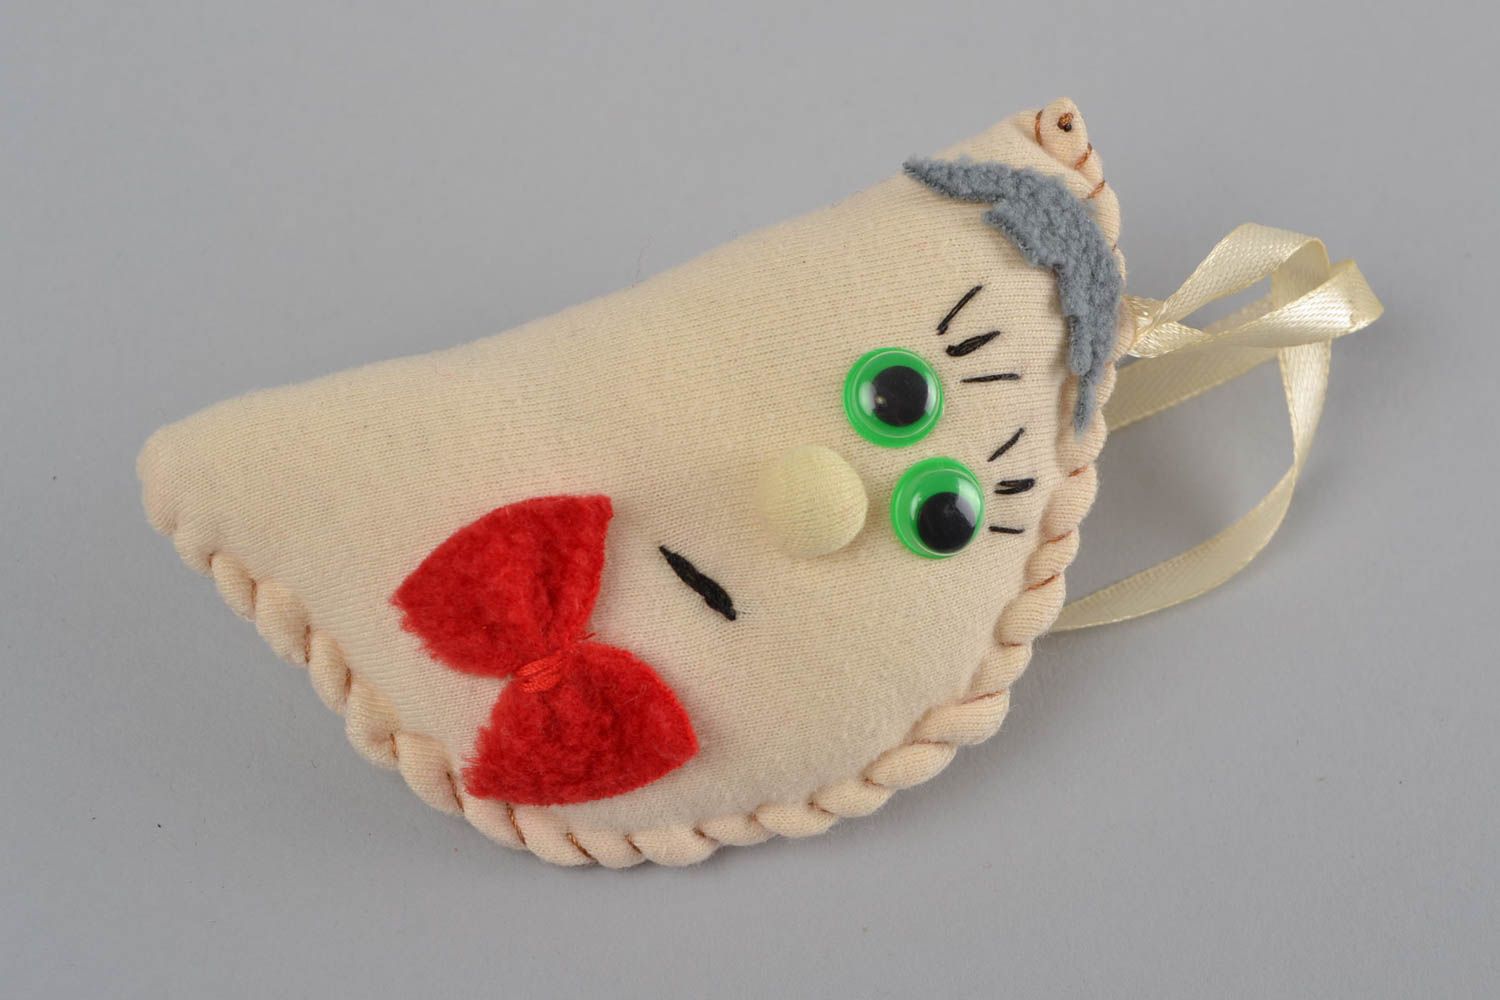 Handmade soft toy varenyk with eyelet mafe of fleece interior wall hanger photo 3